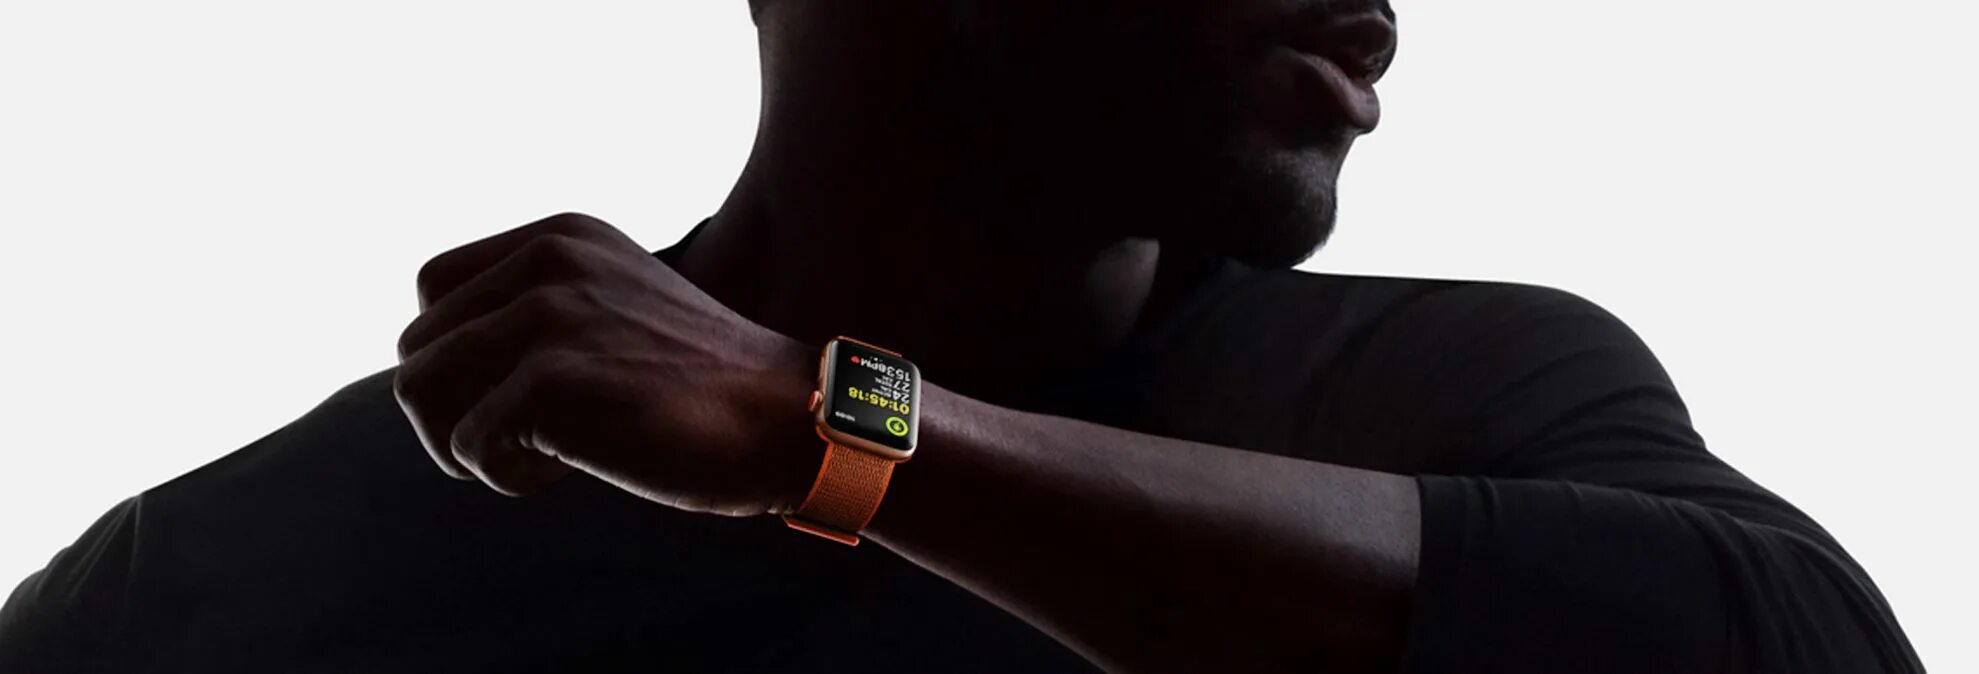 Apple watch se 2021. Apple watch 2022. Часы Apple на руке. Человек крупным планом с Apple watch. Загар и Apple watch.